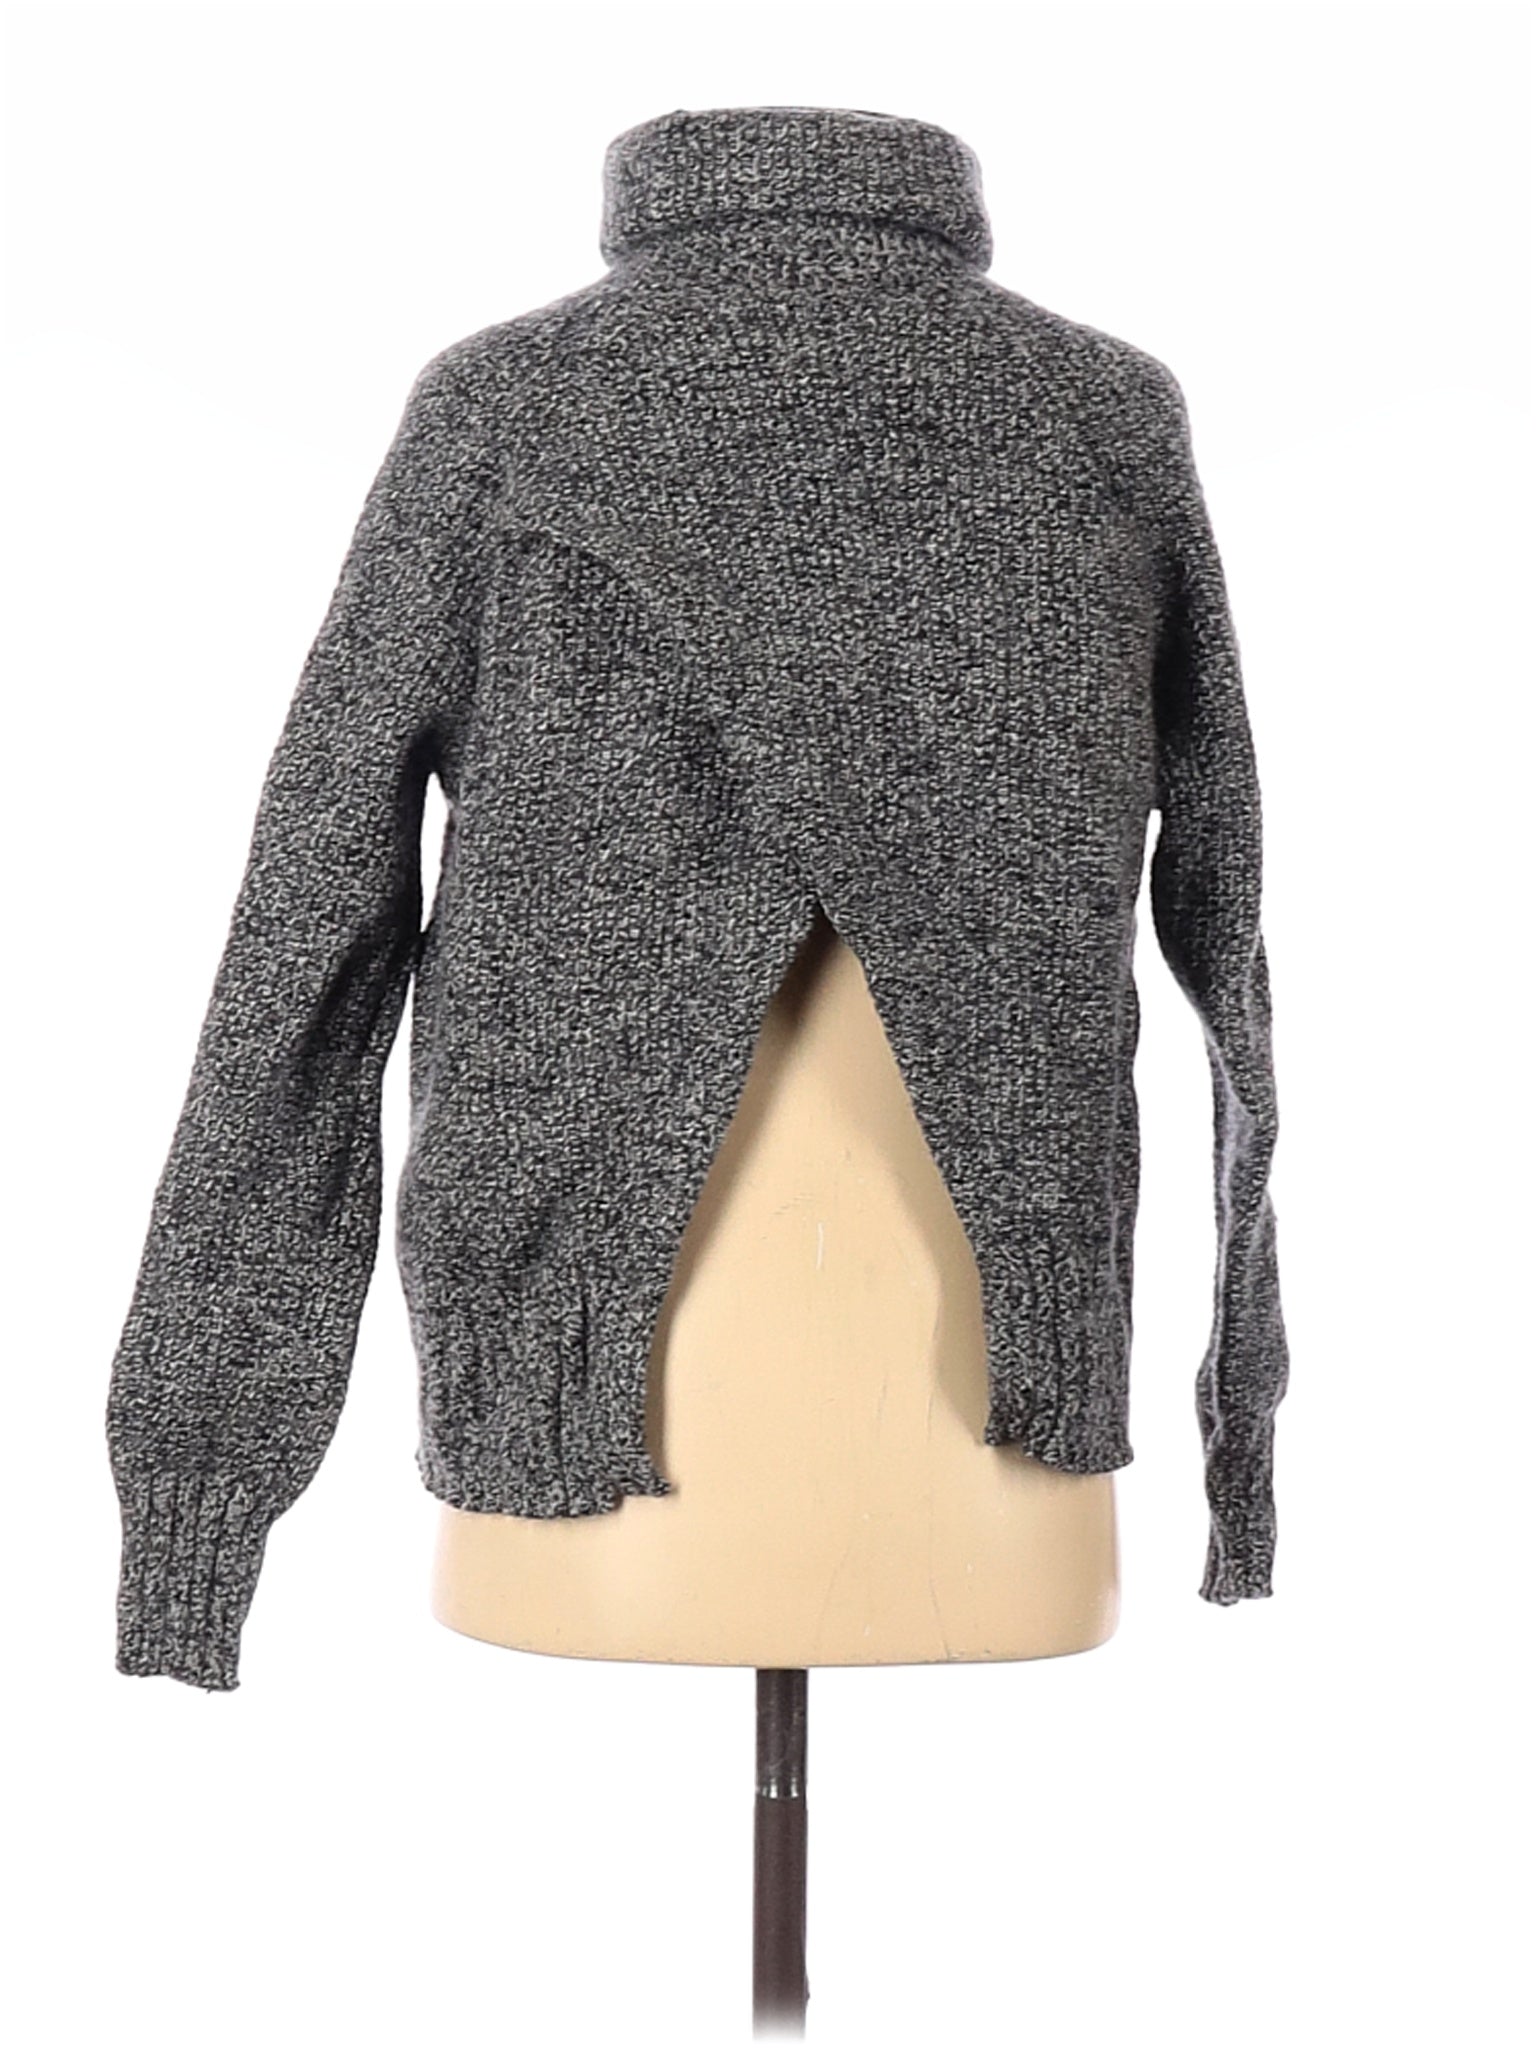 Turtleneck Sweater size - XS